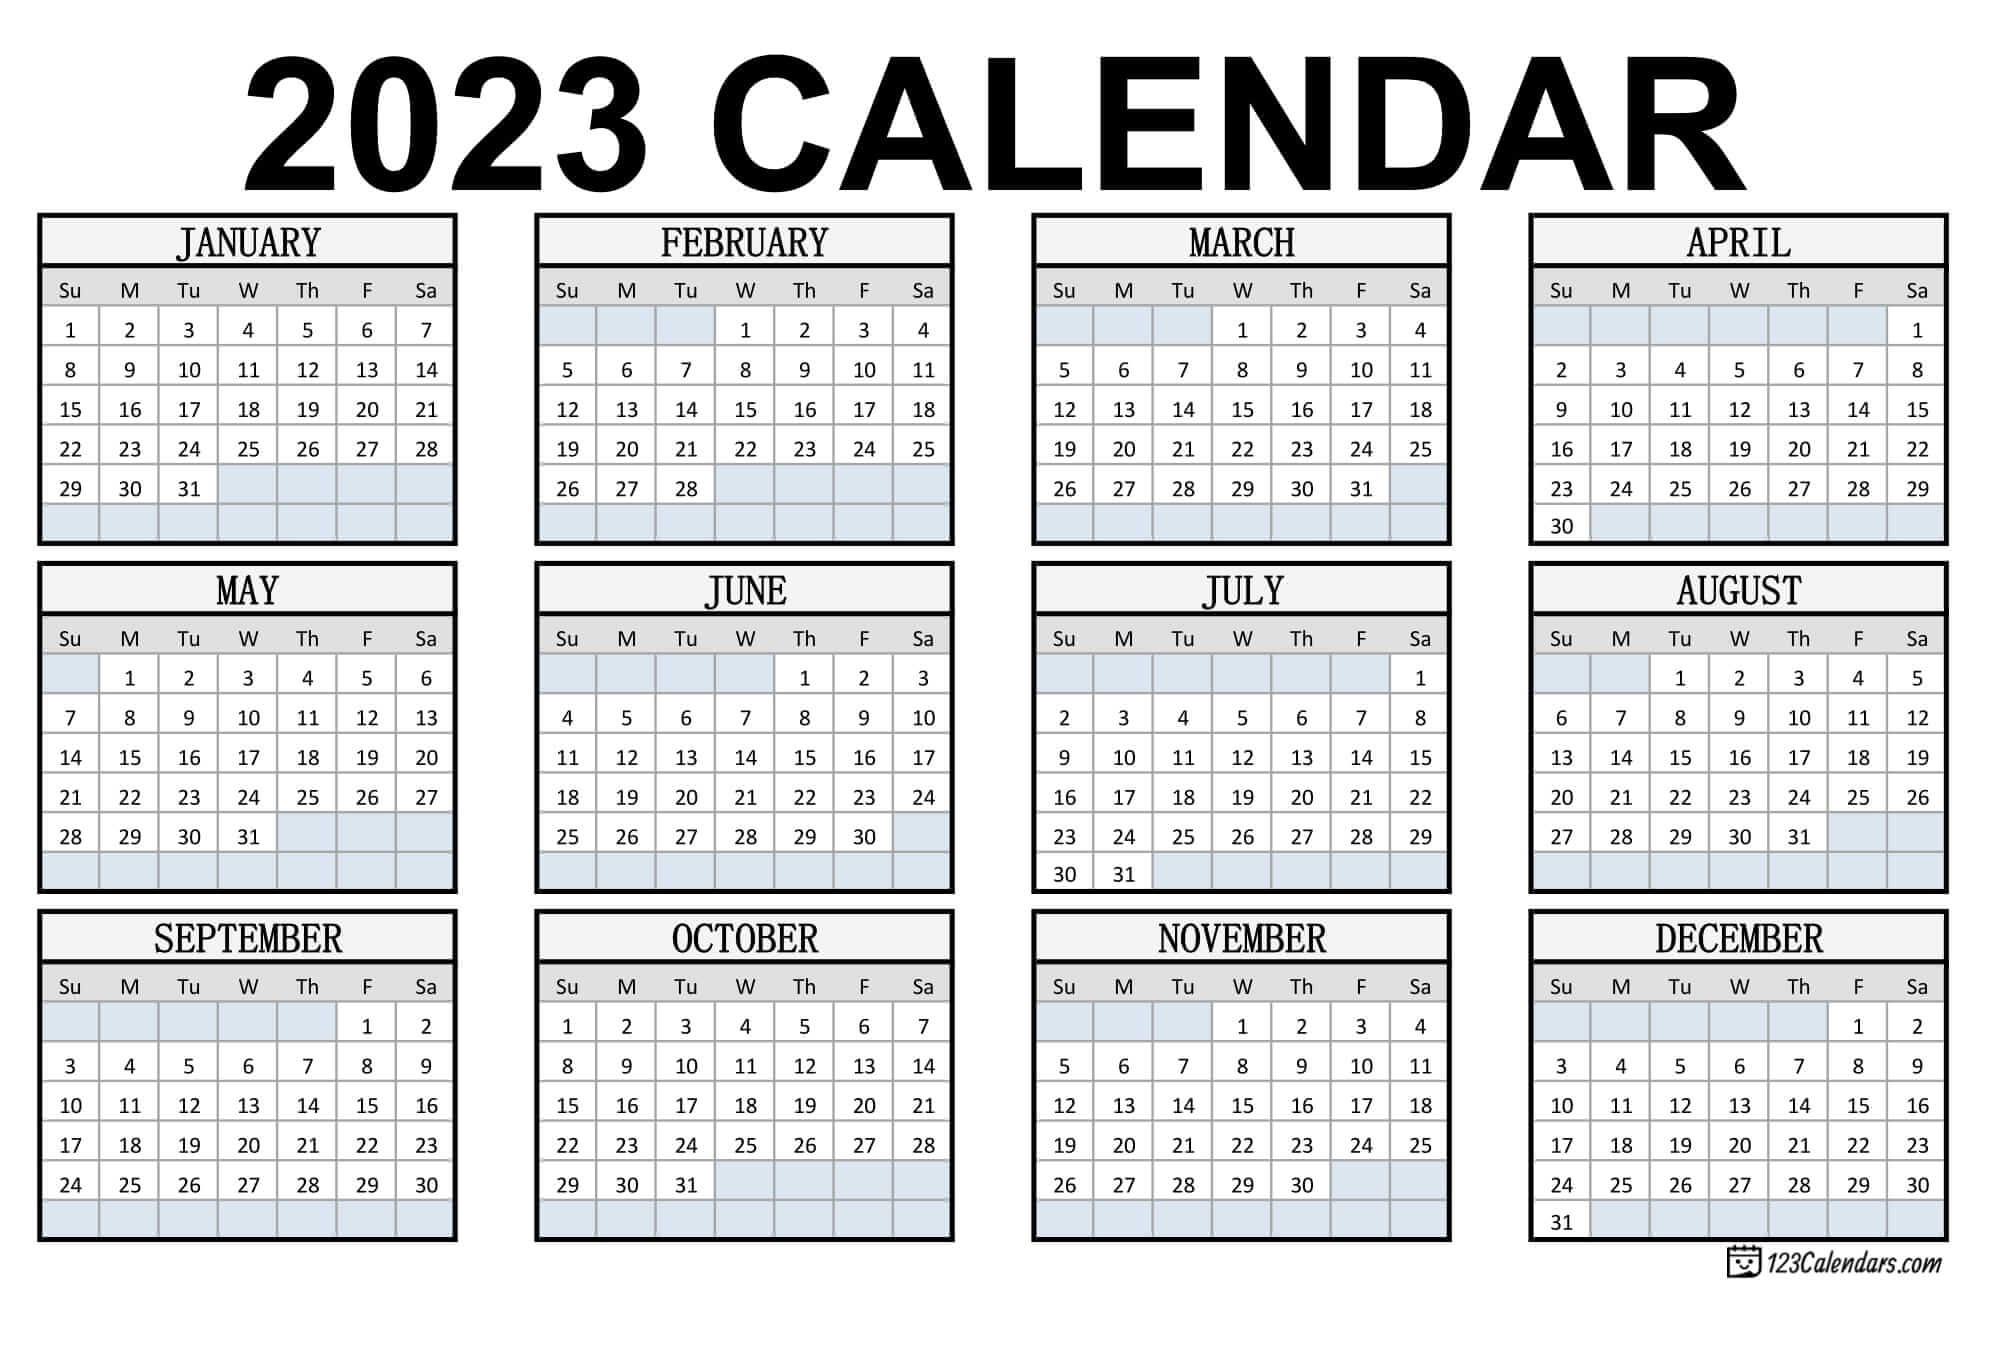 2023 Printable Calendars 123calendars 2023 calendar on Tumblr